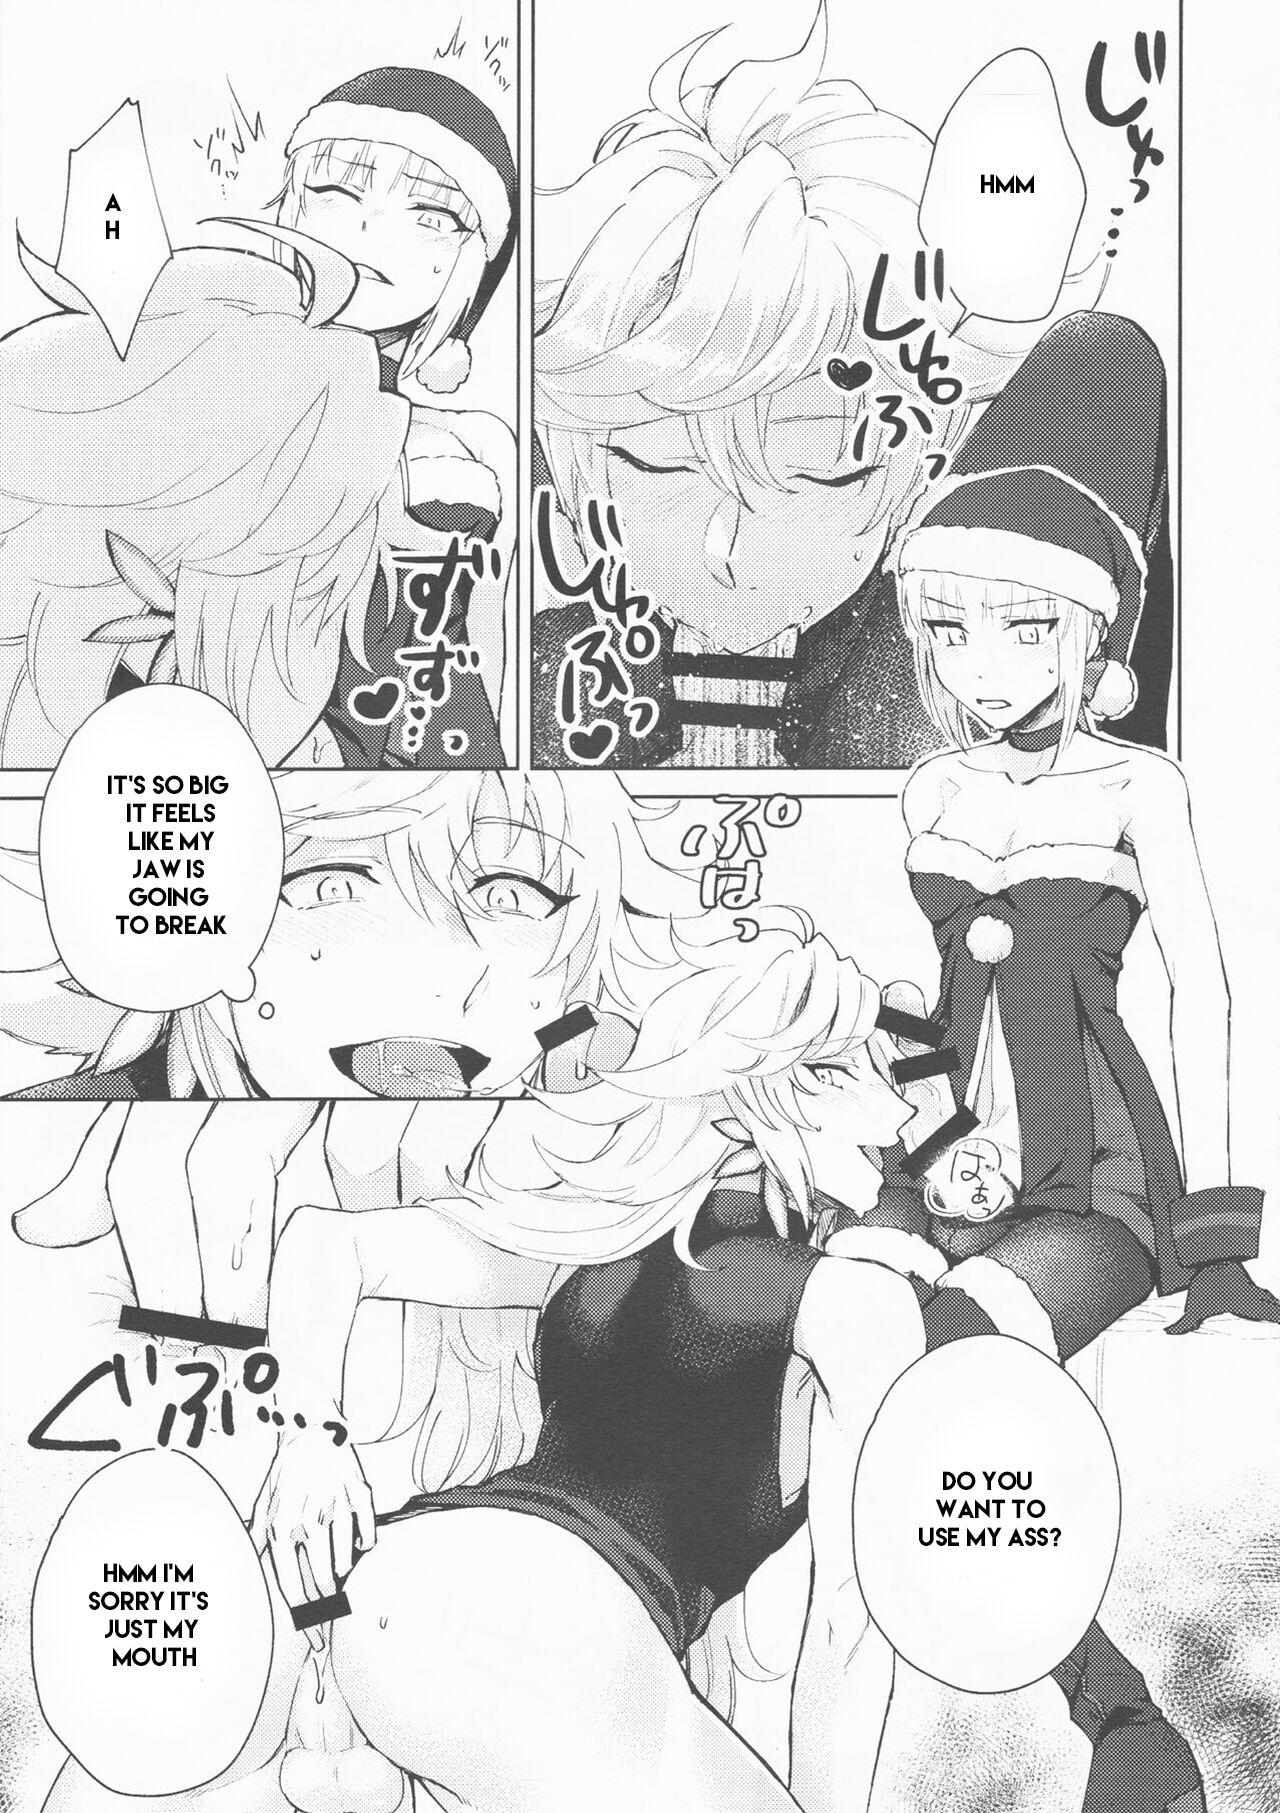 Safadinha (Hazama)] Hero Milking (FateGrand Order) part 1 machine translated - Fate grand order Facesitting - Page 7